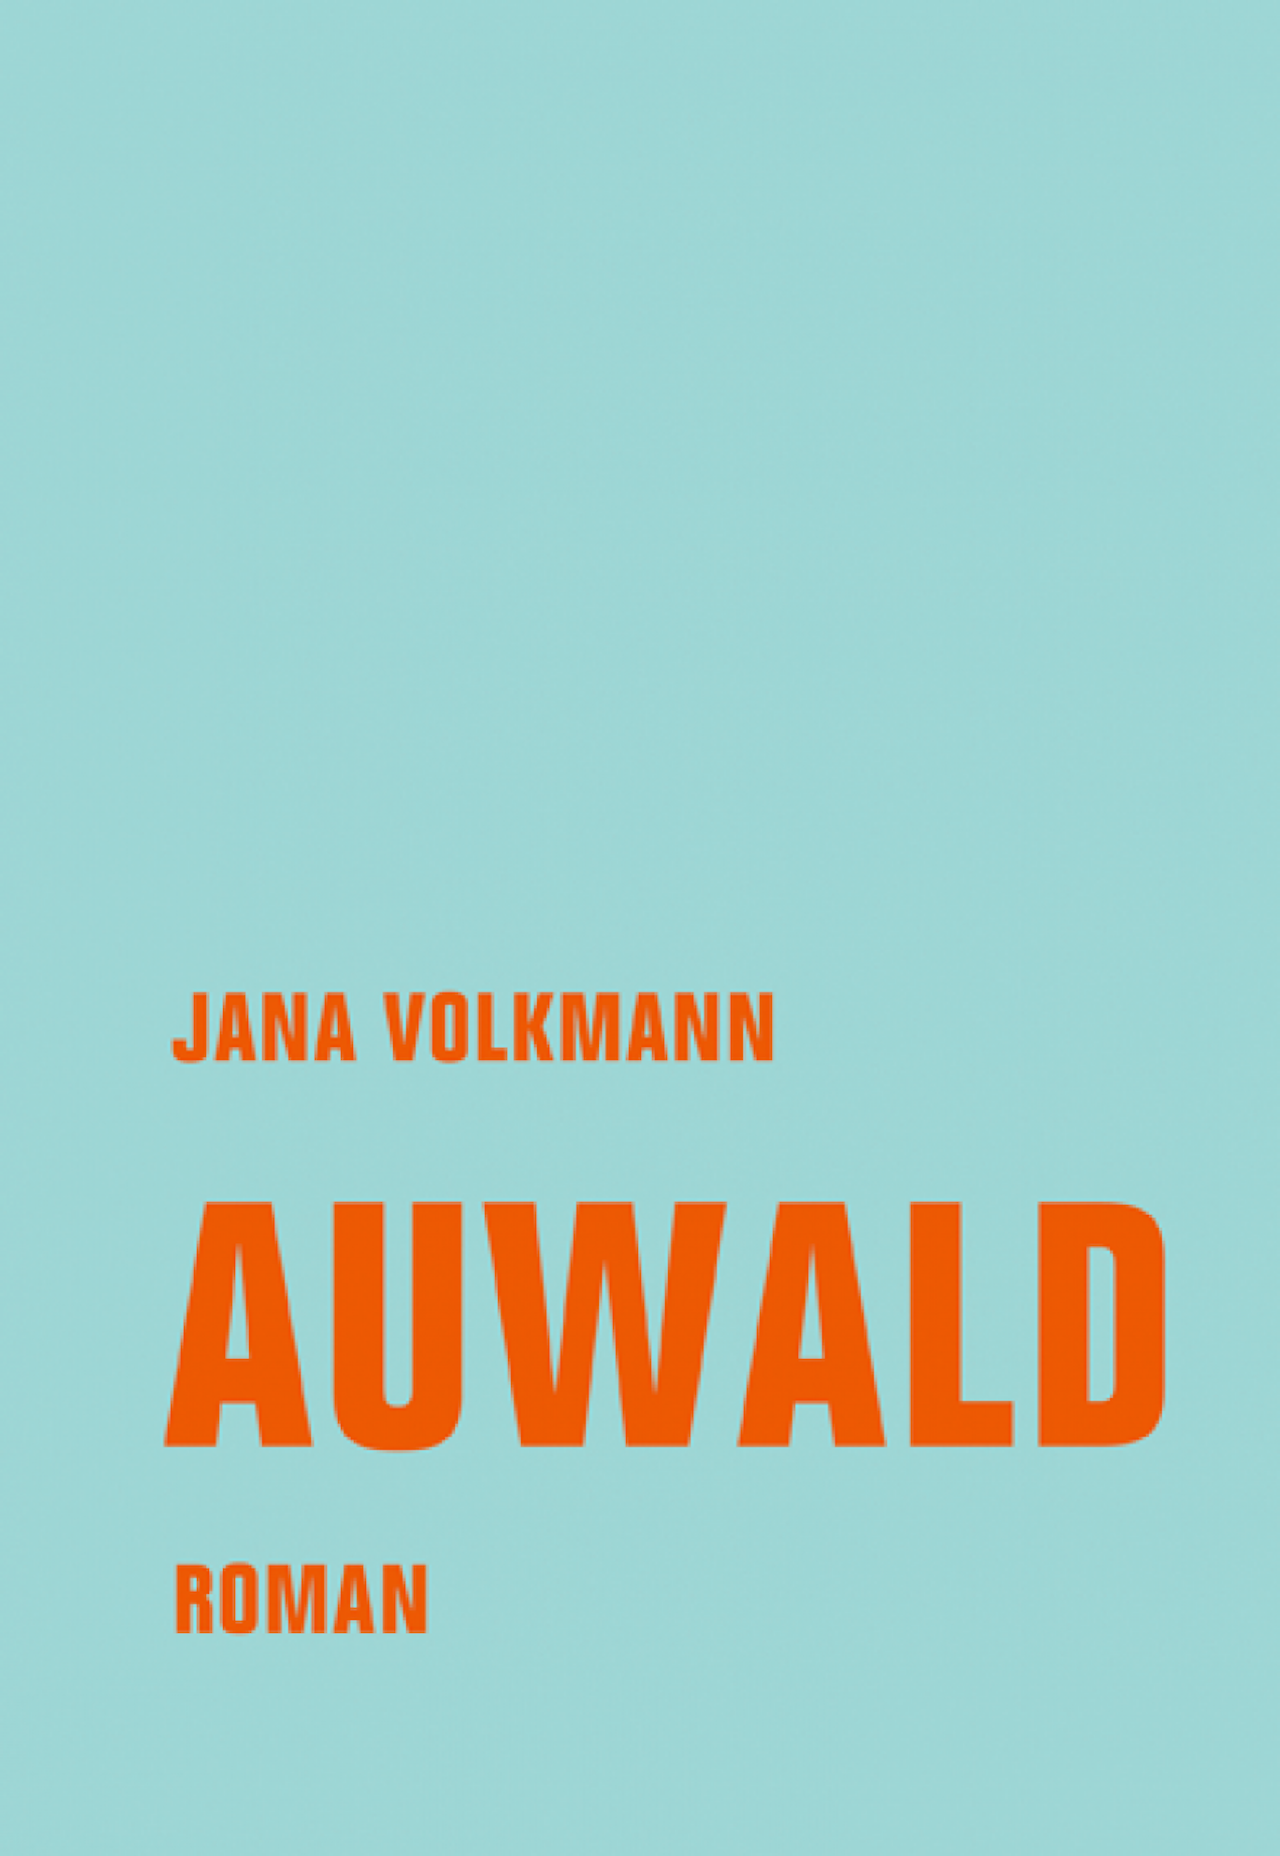 Jana Volkmann "Auwald"